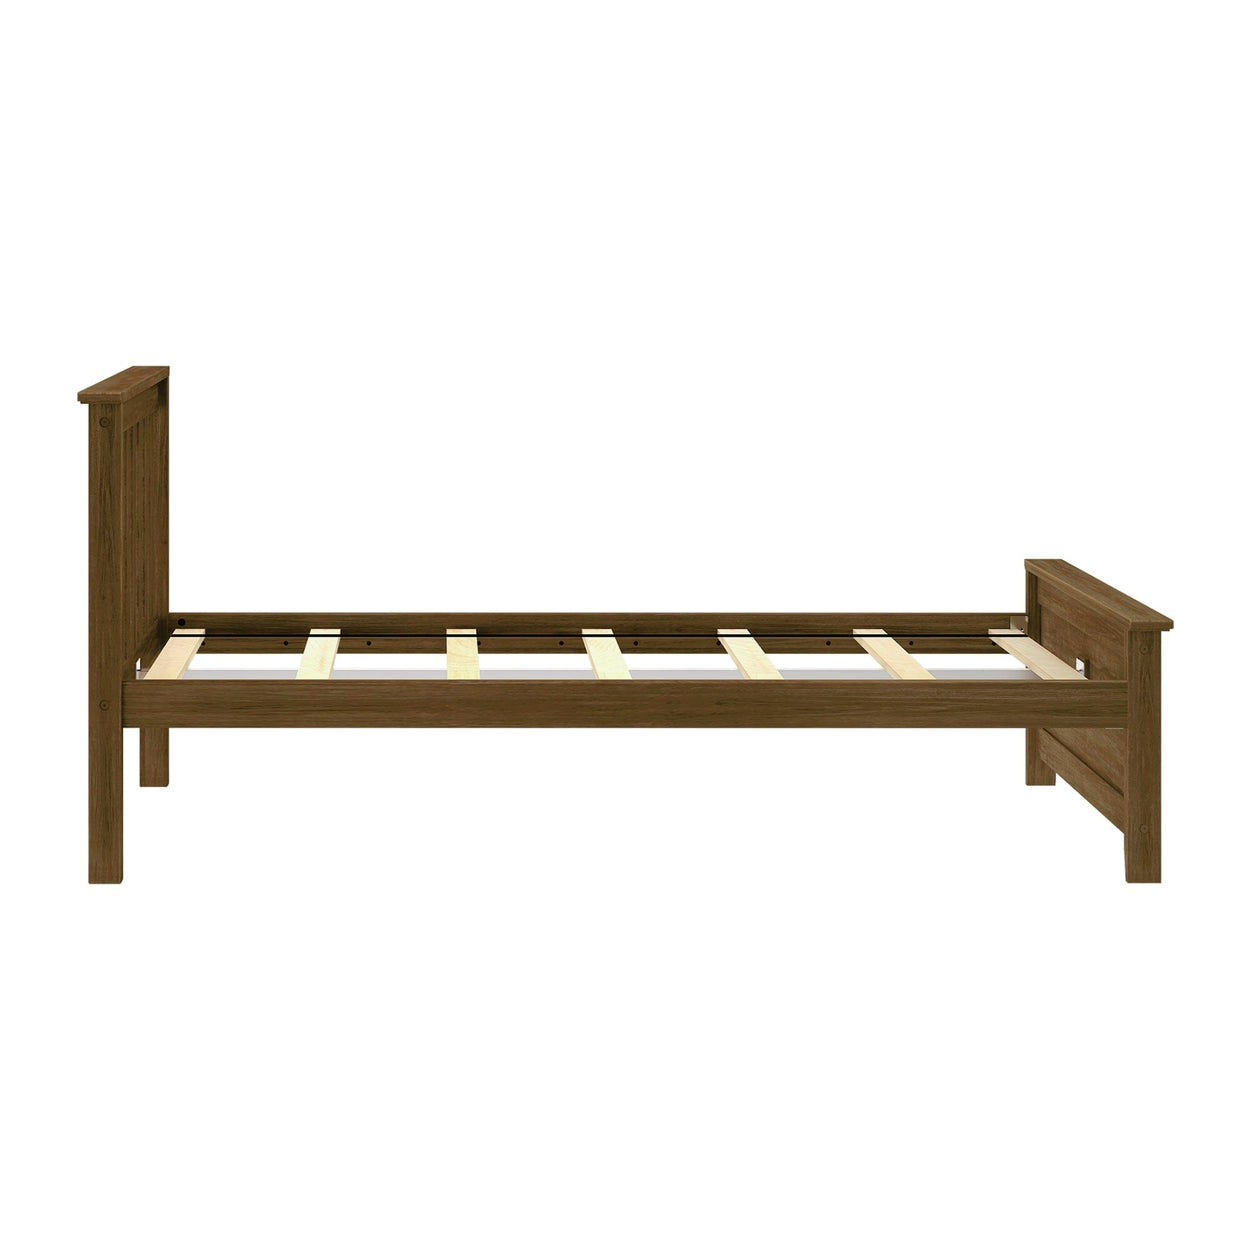 180210-008 : Kids Beds Classic Twin-Size Platform Bed, Walnut